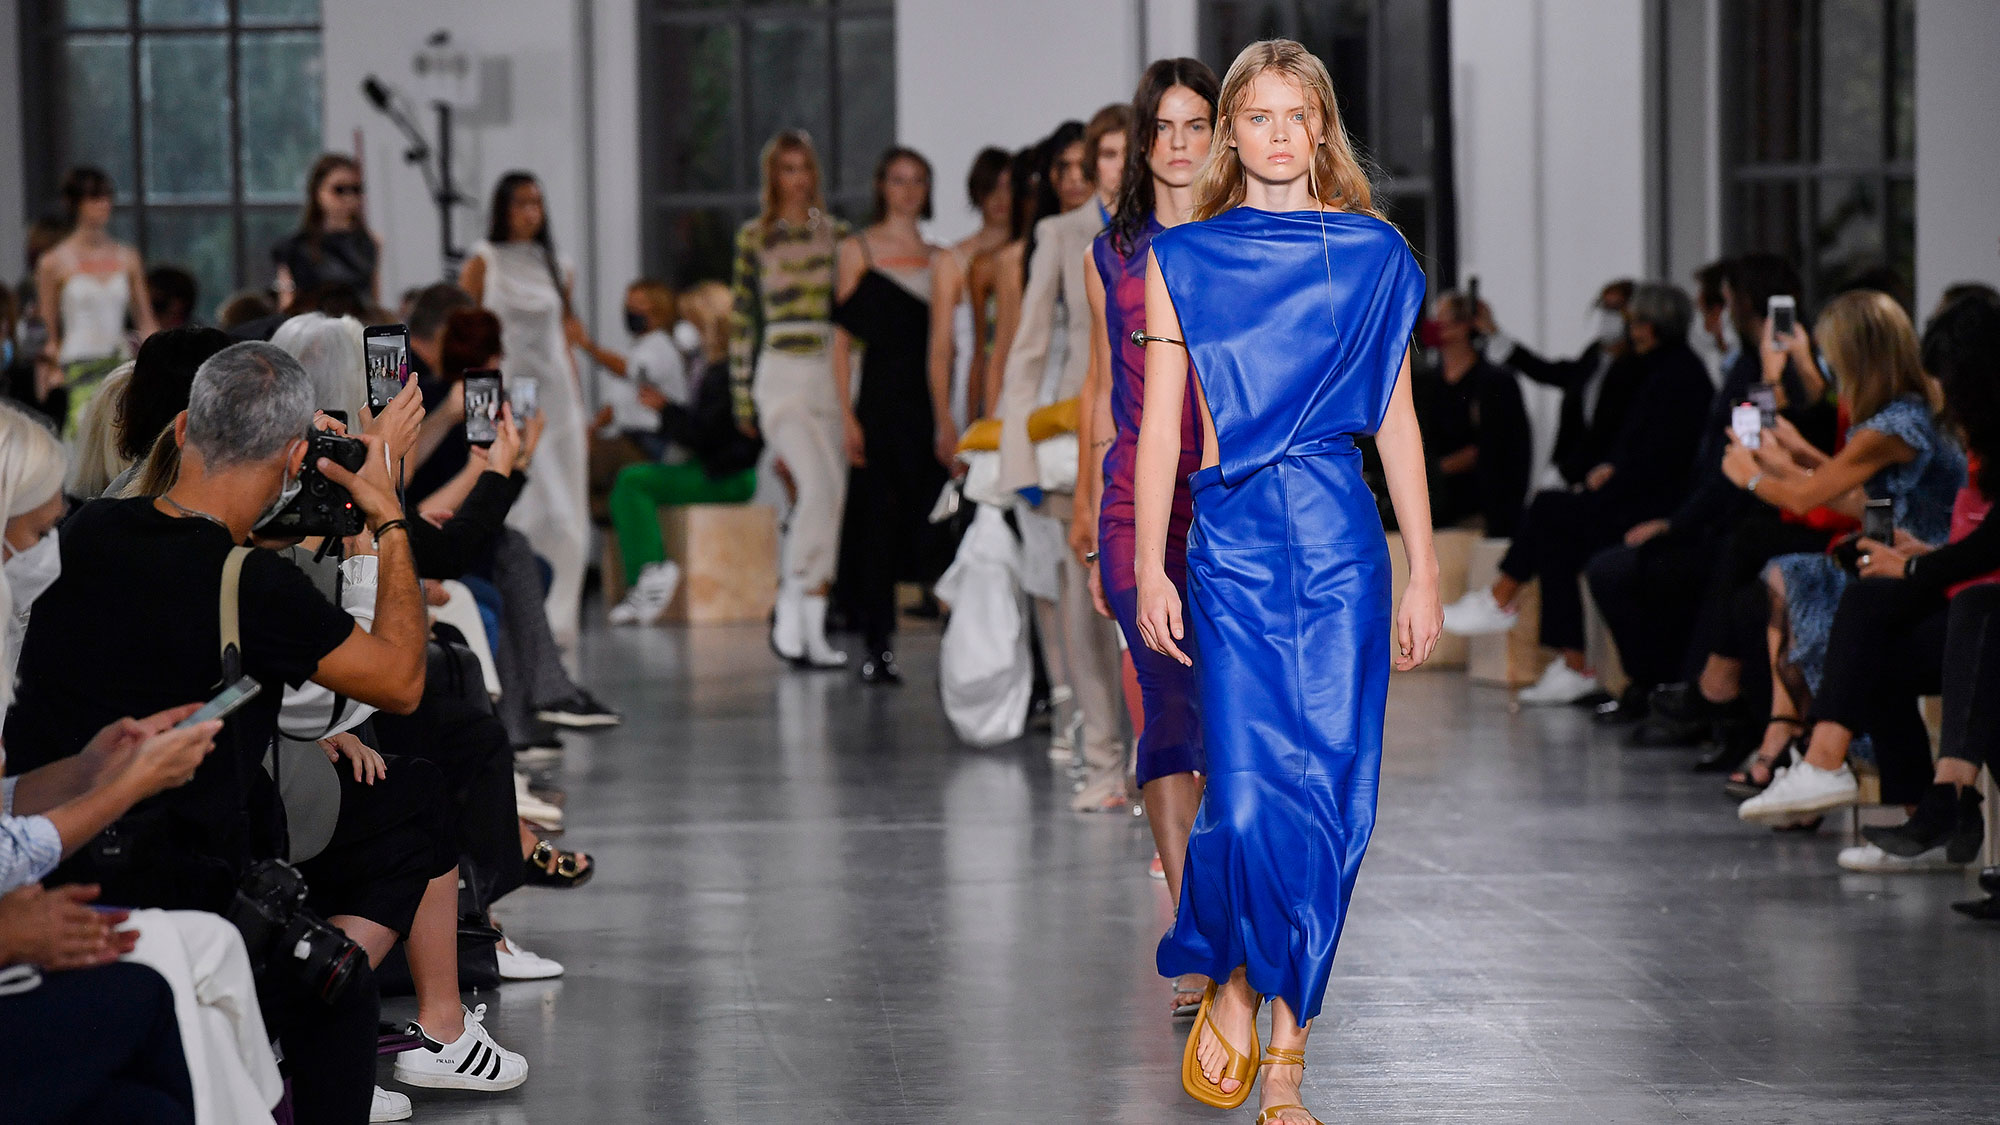 Milan Fashion Week proves even a pandemic can’t stop fashion